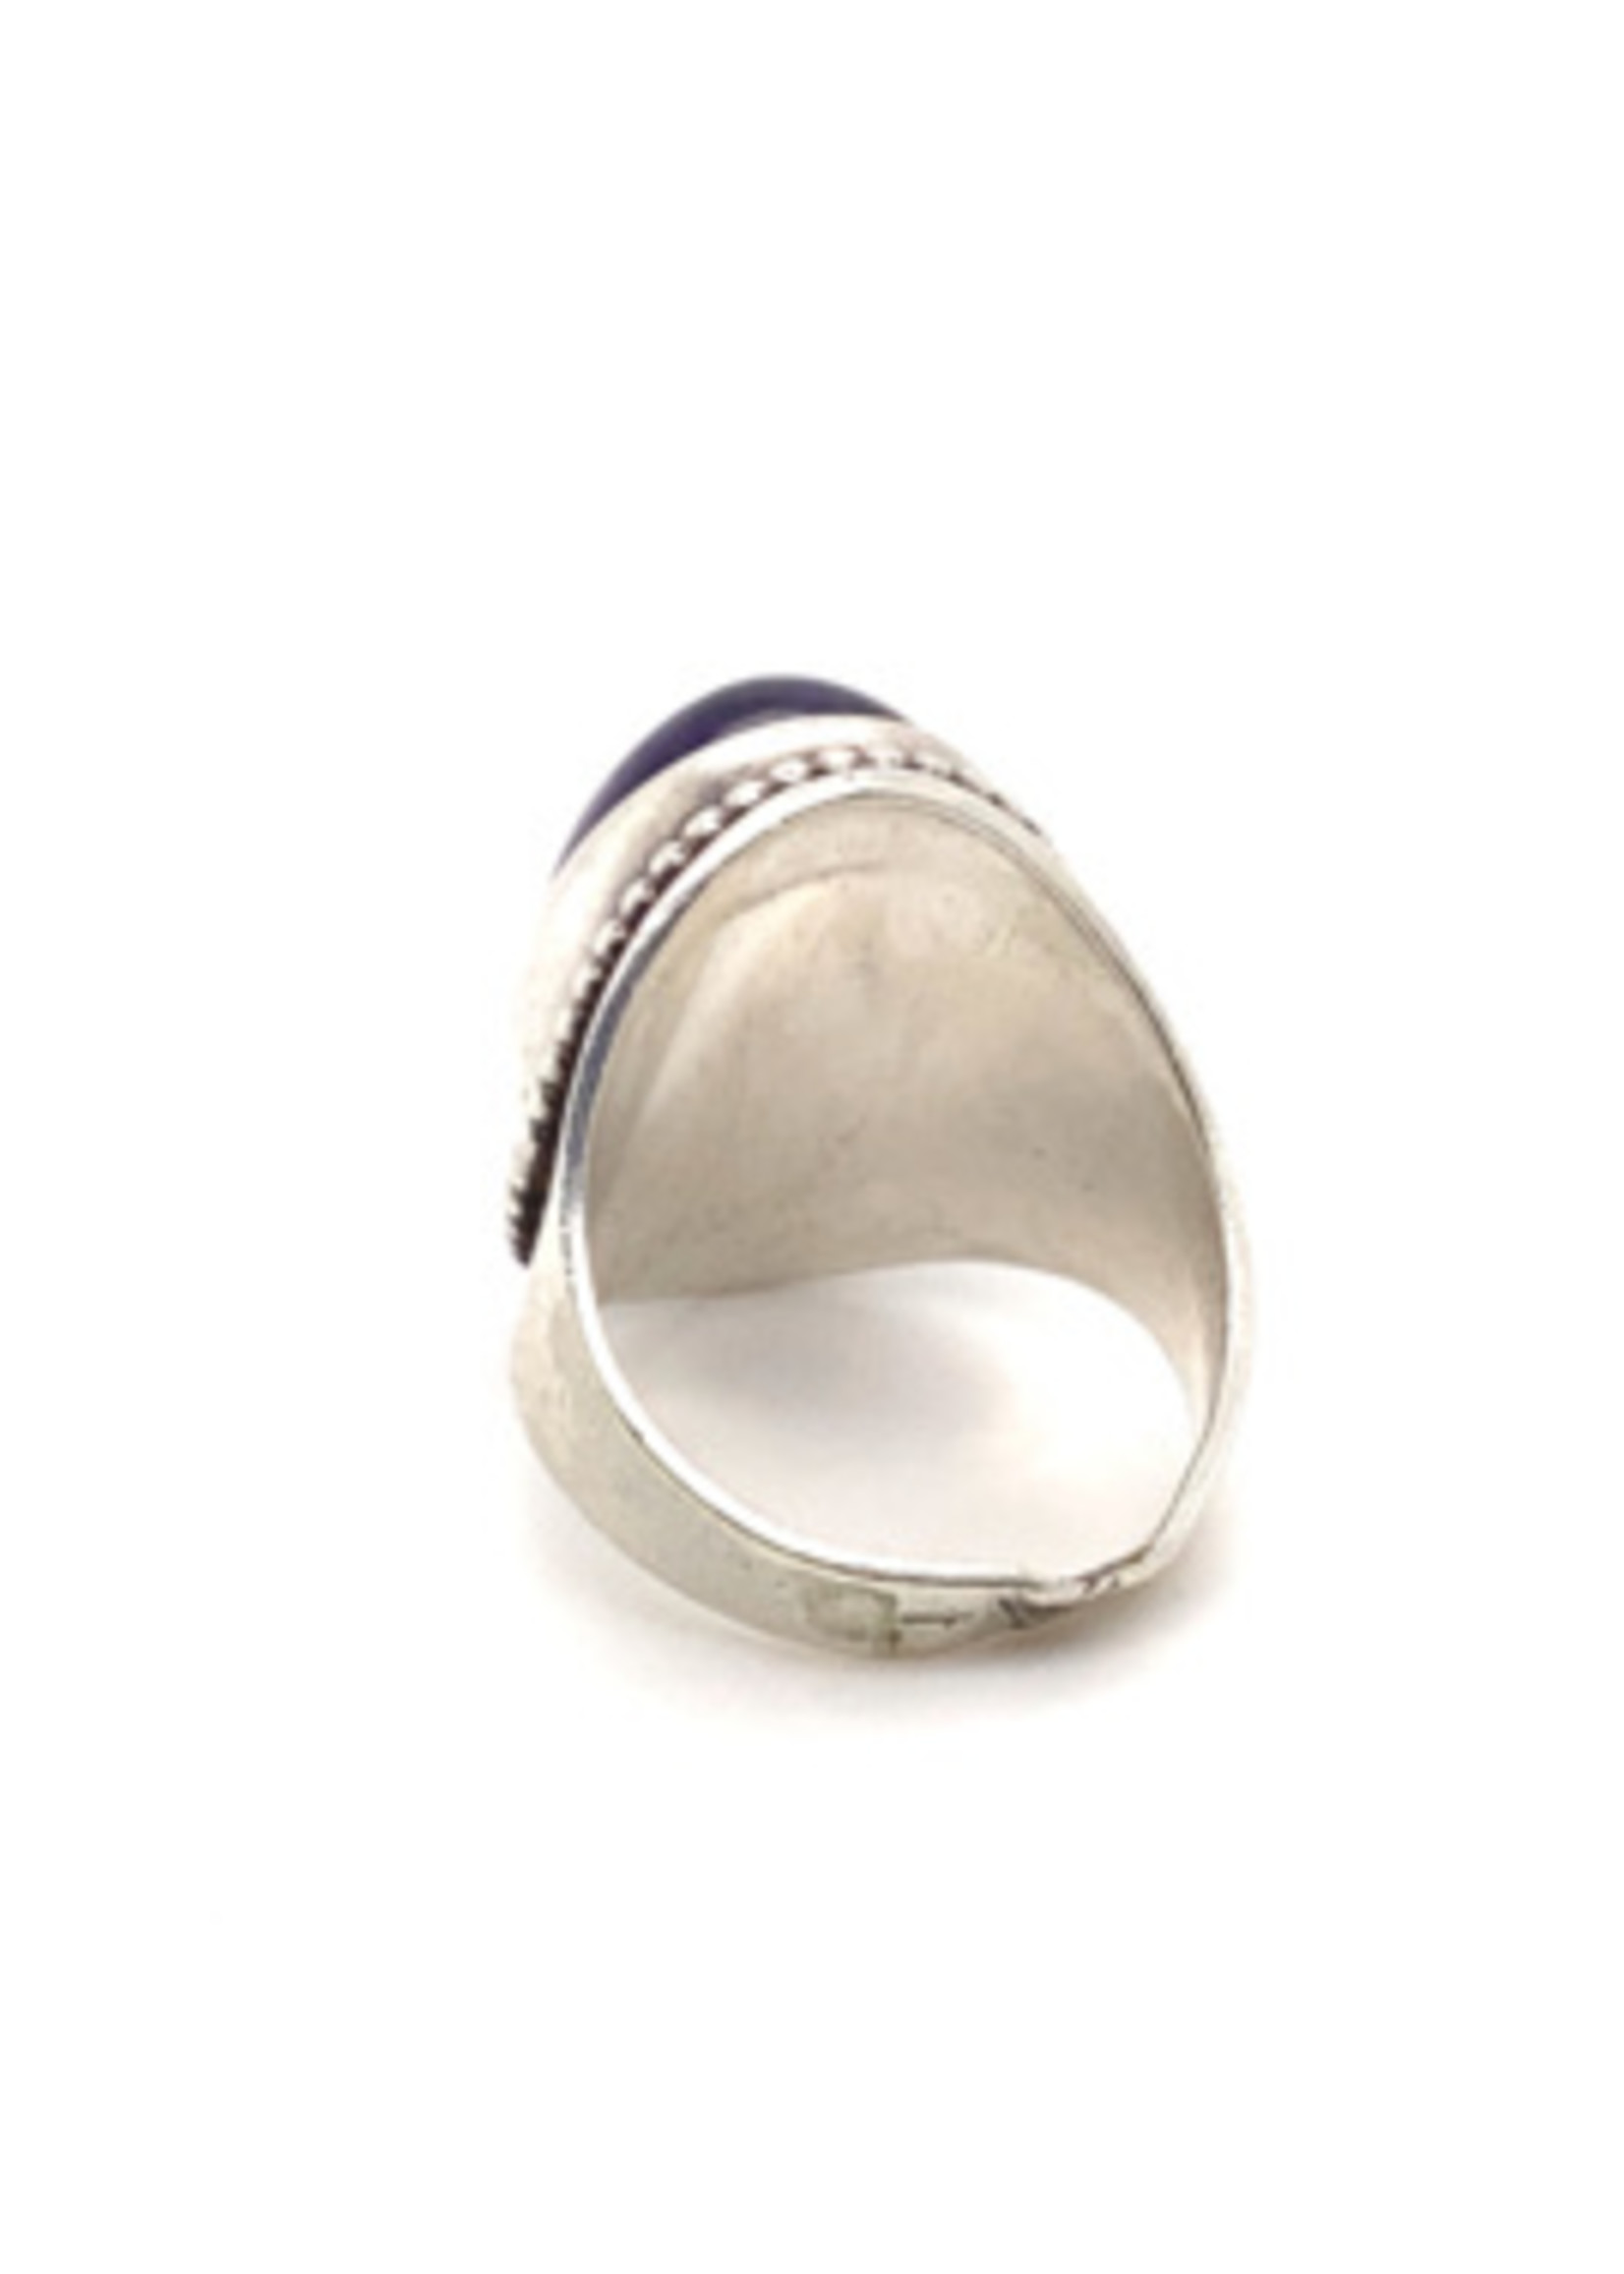 Vintage & Occasion Occasion zilveren ring amethist